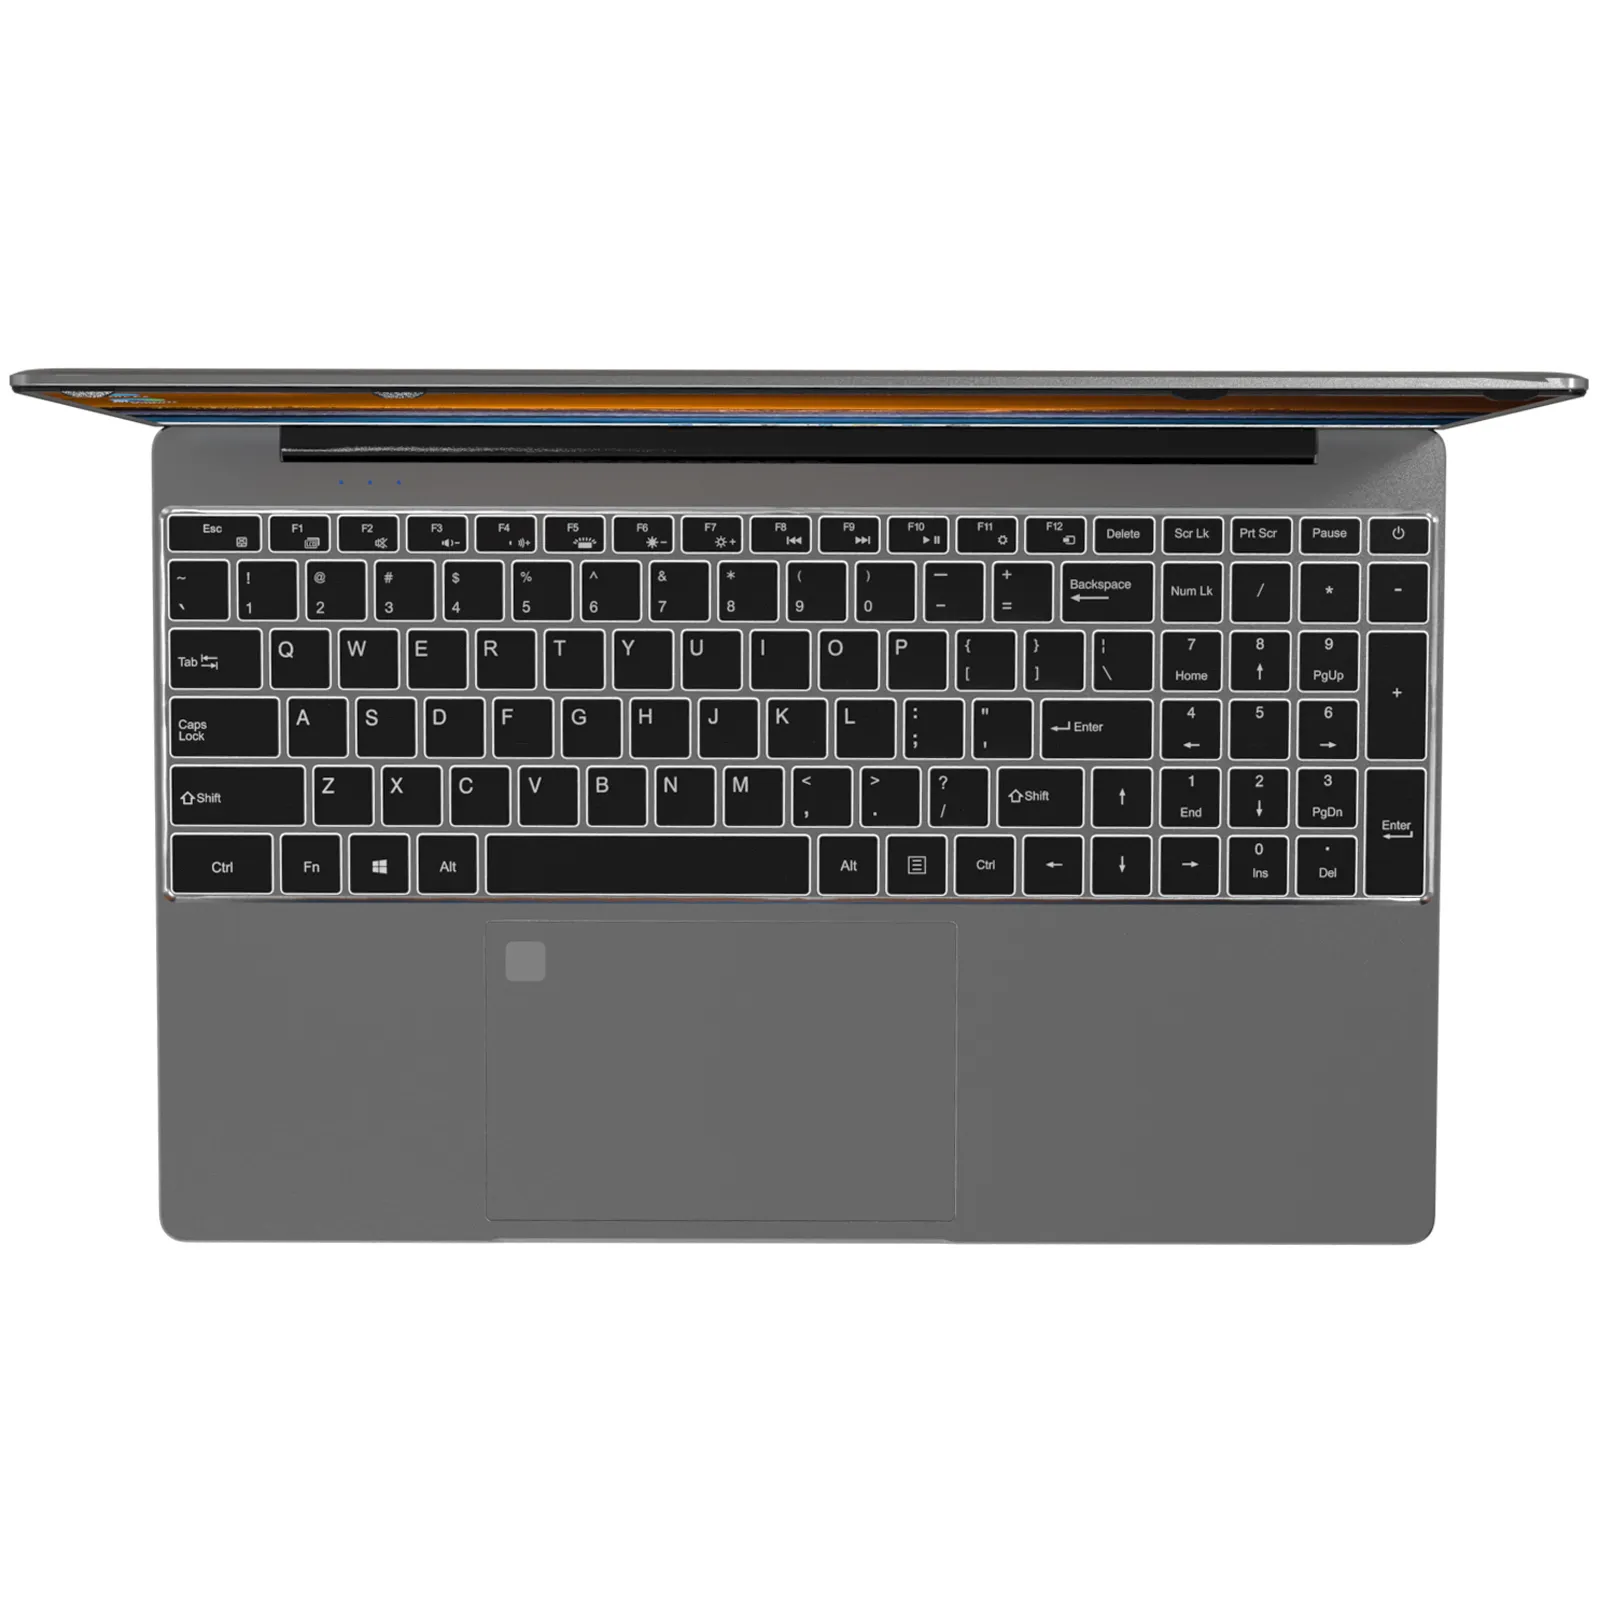 Laptop Core i5 15.6 inci Intel generasi ke-10, i5-1035G4 RAM DDR4 16GB ROM 128GB PC untuk rumah siswa game bisnis laptop kantor